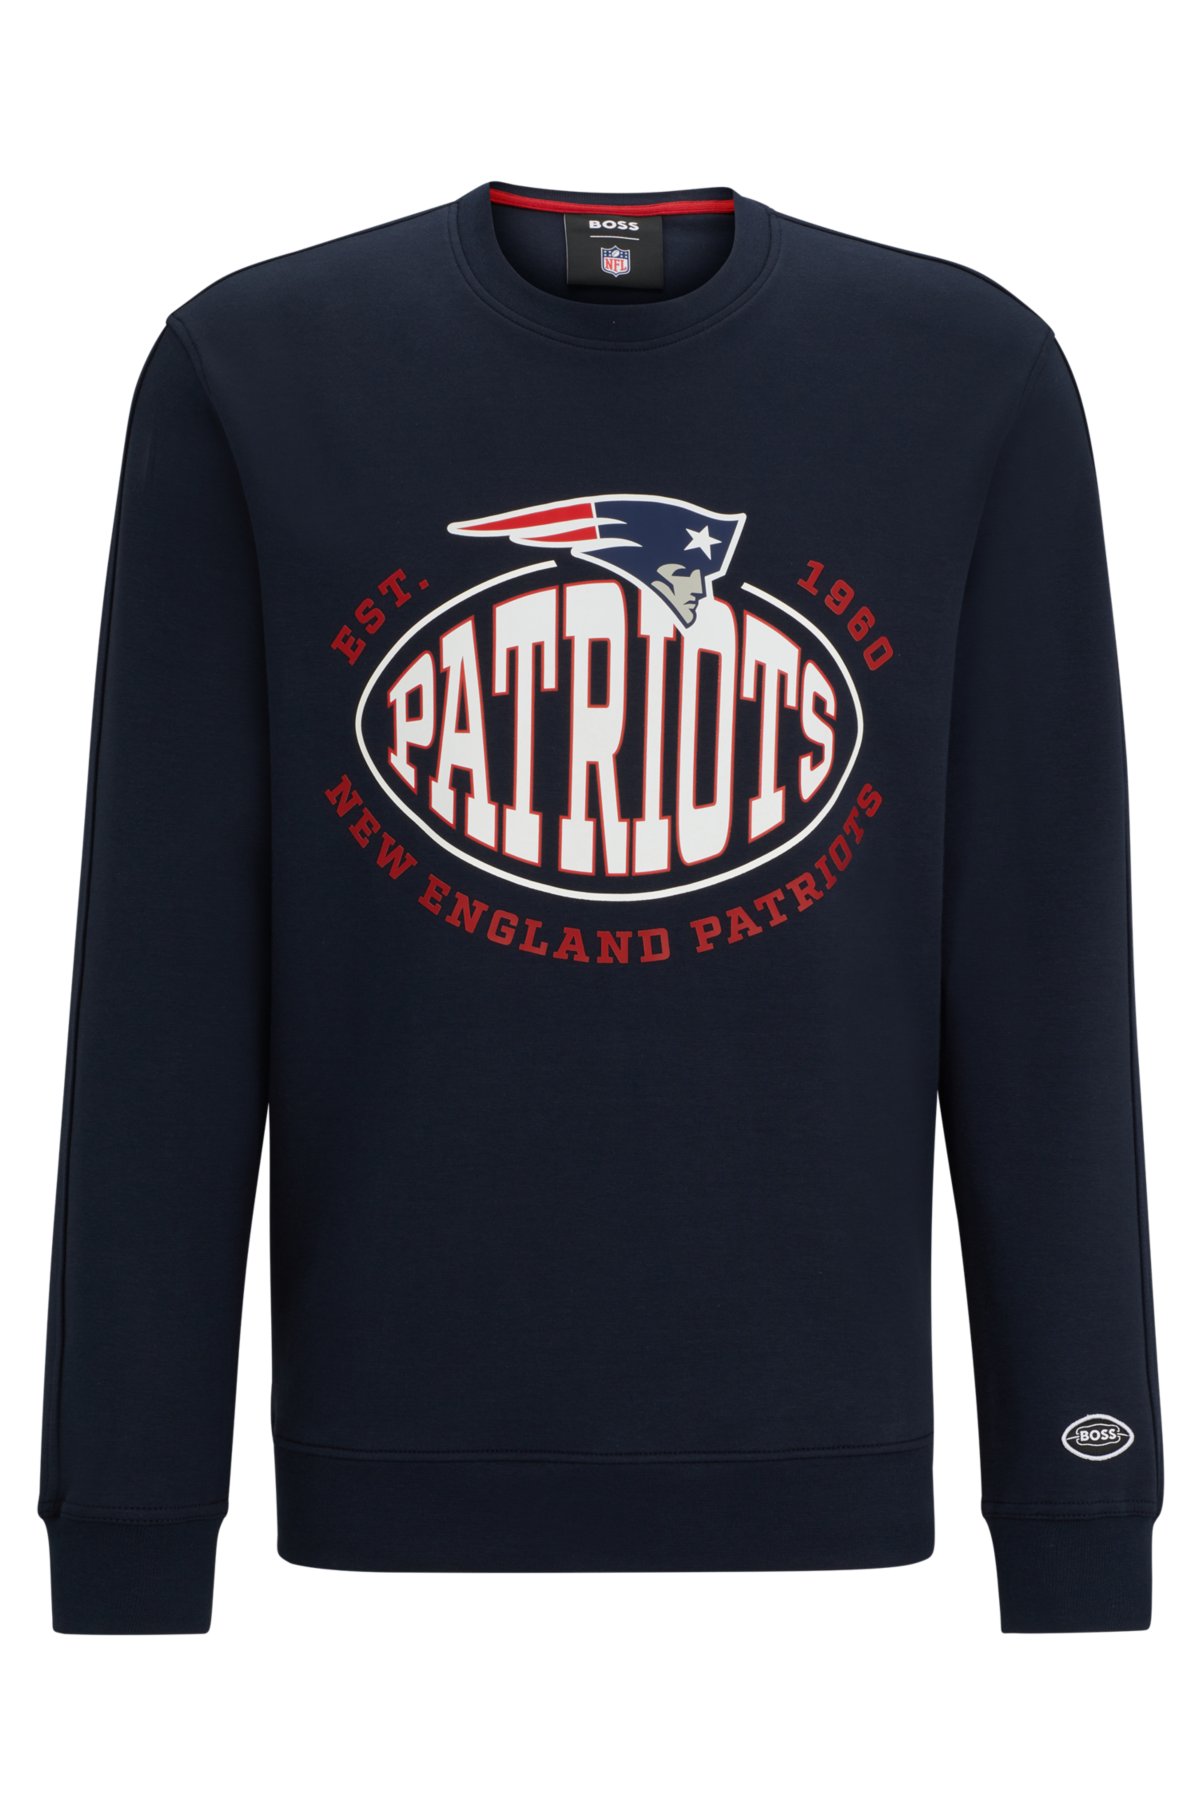 BOSS x NFL cotton-blend sweatshirt with collaborative branding, Patriots